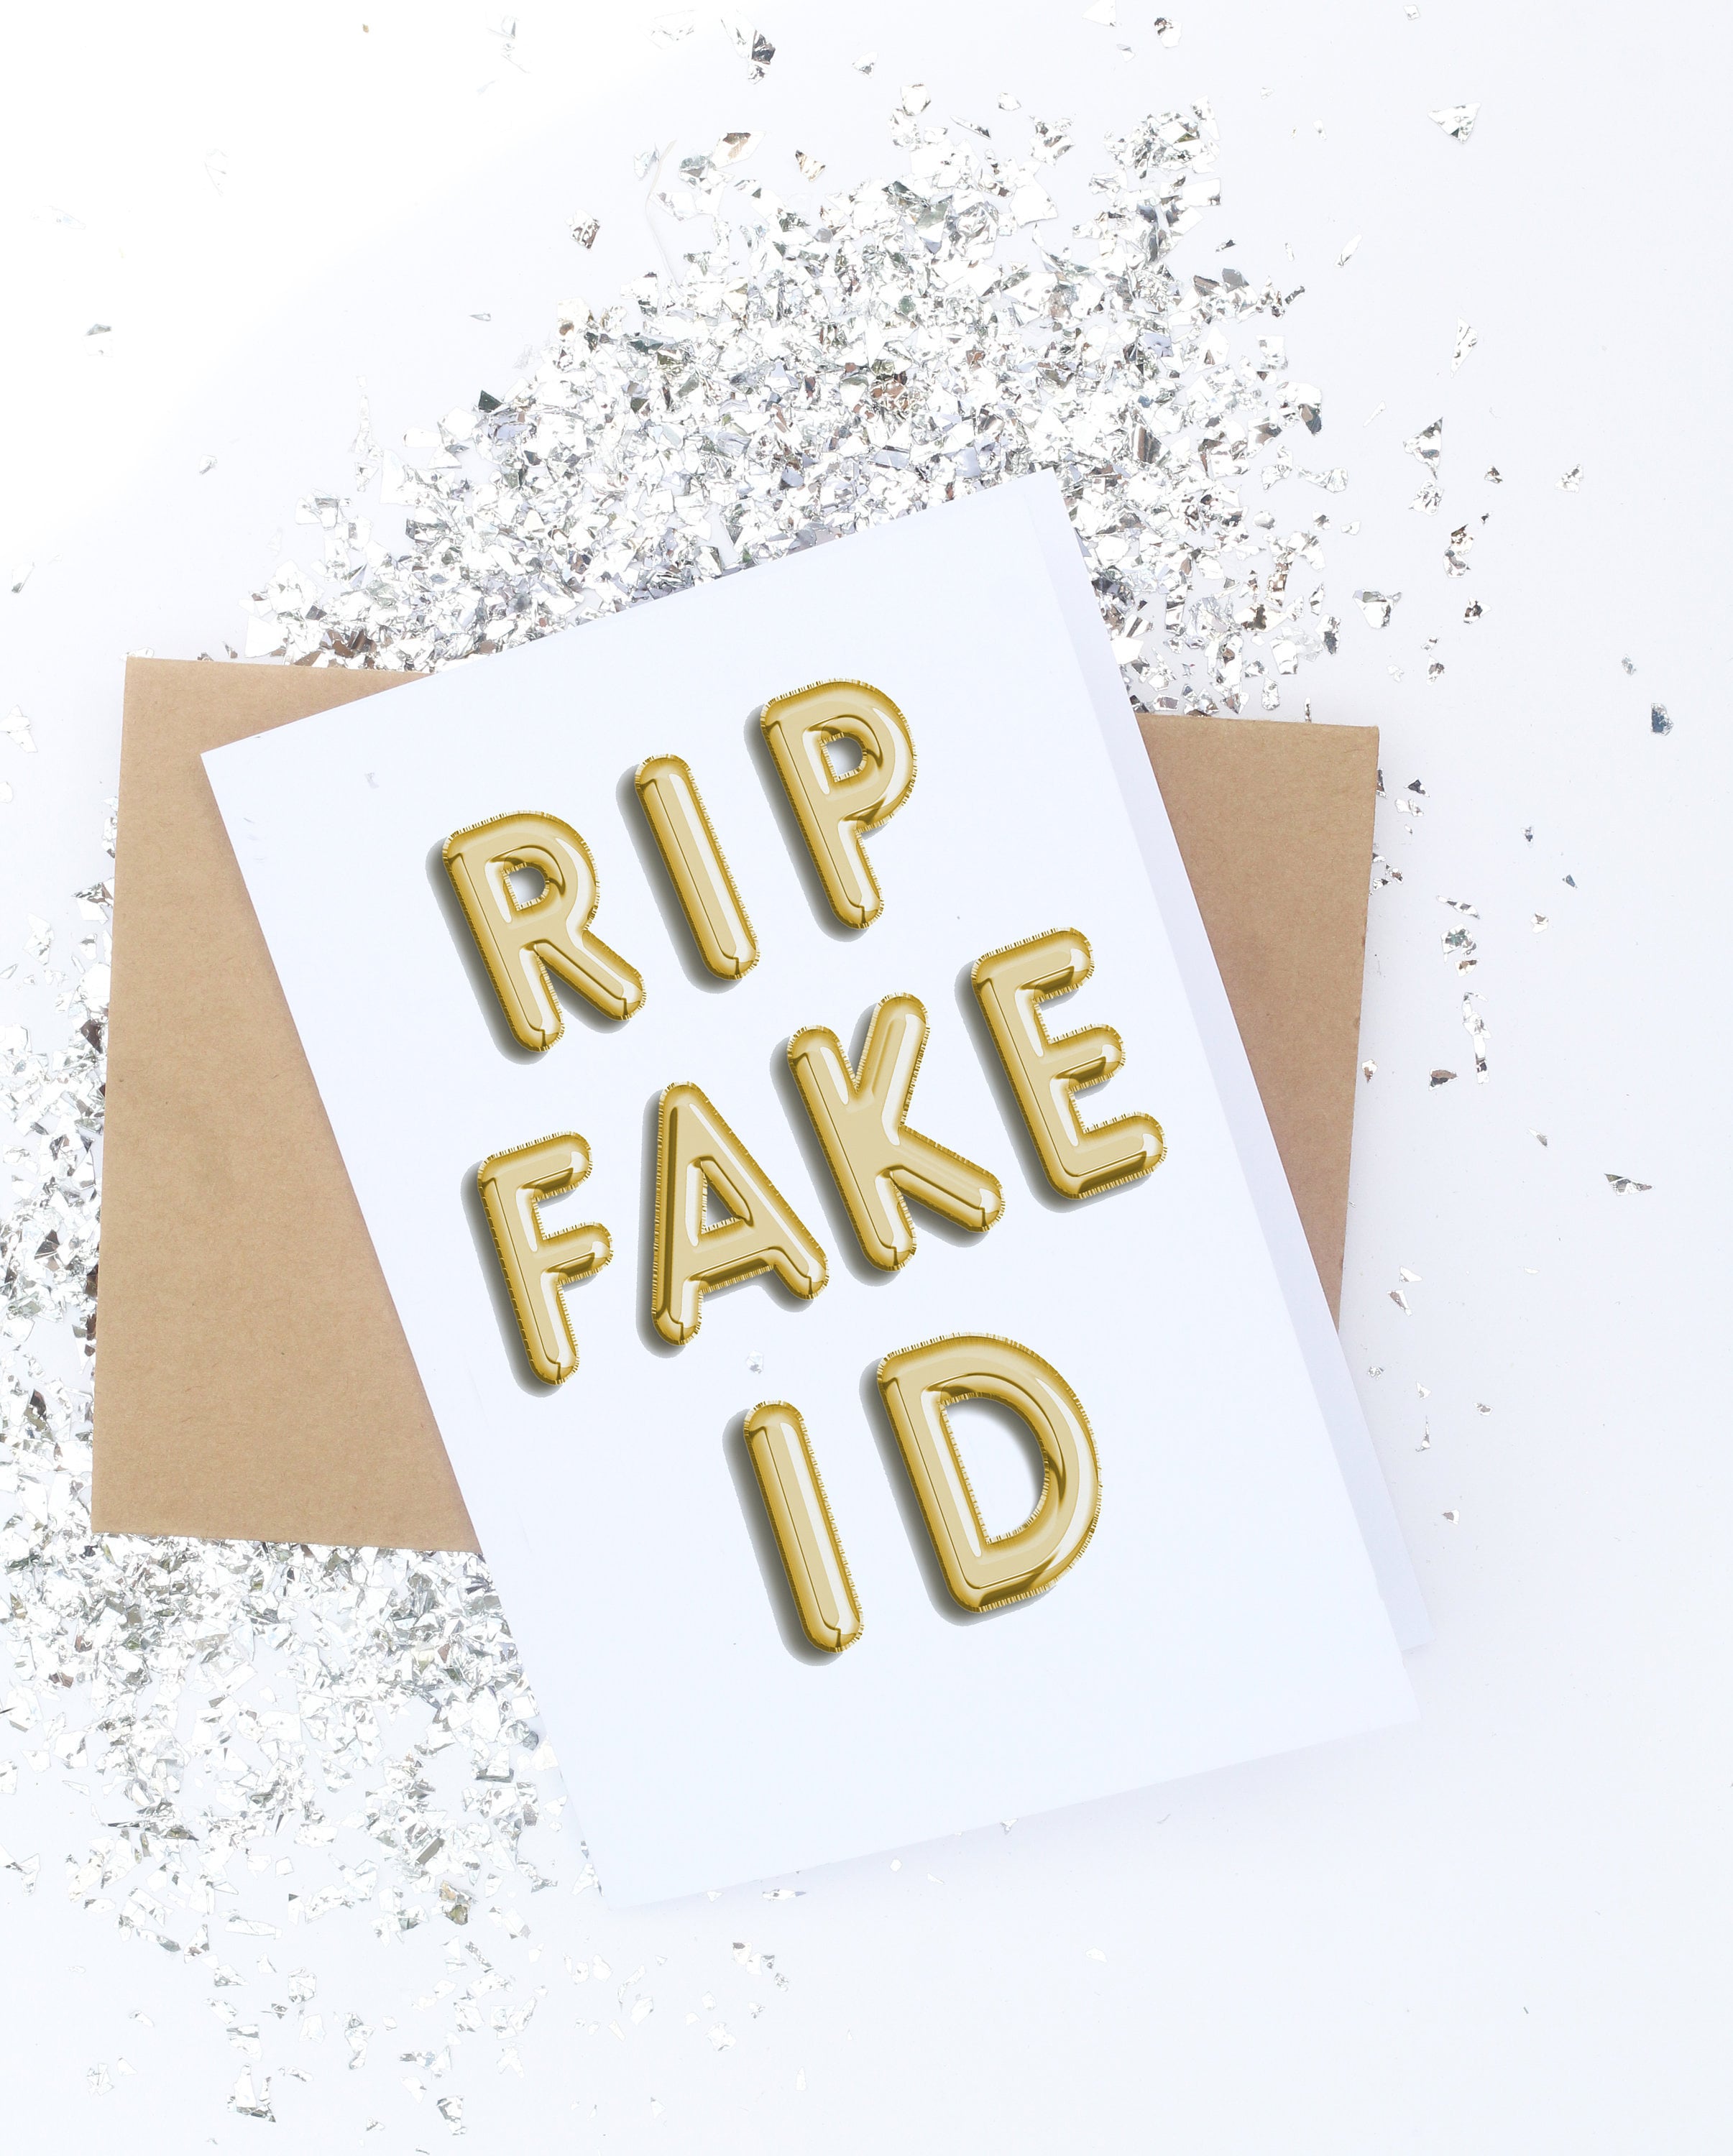 fake 21 id card